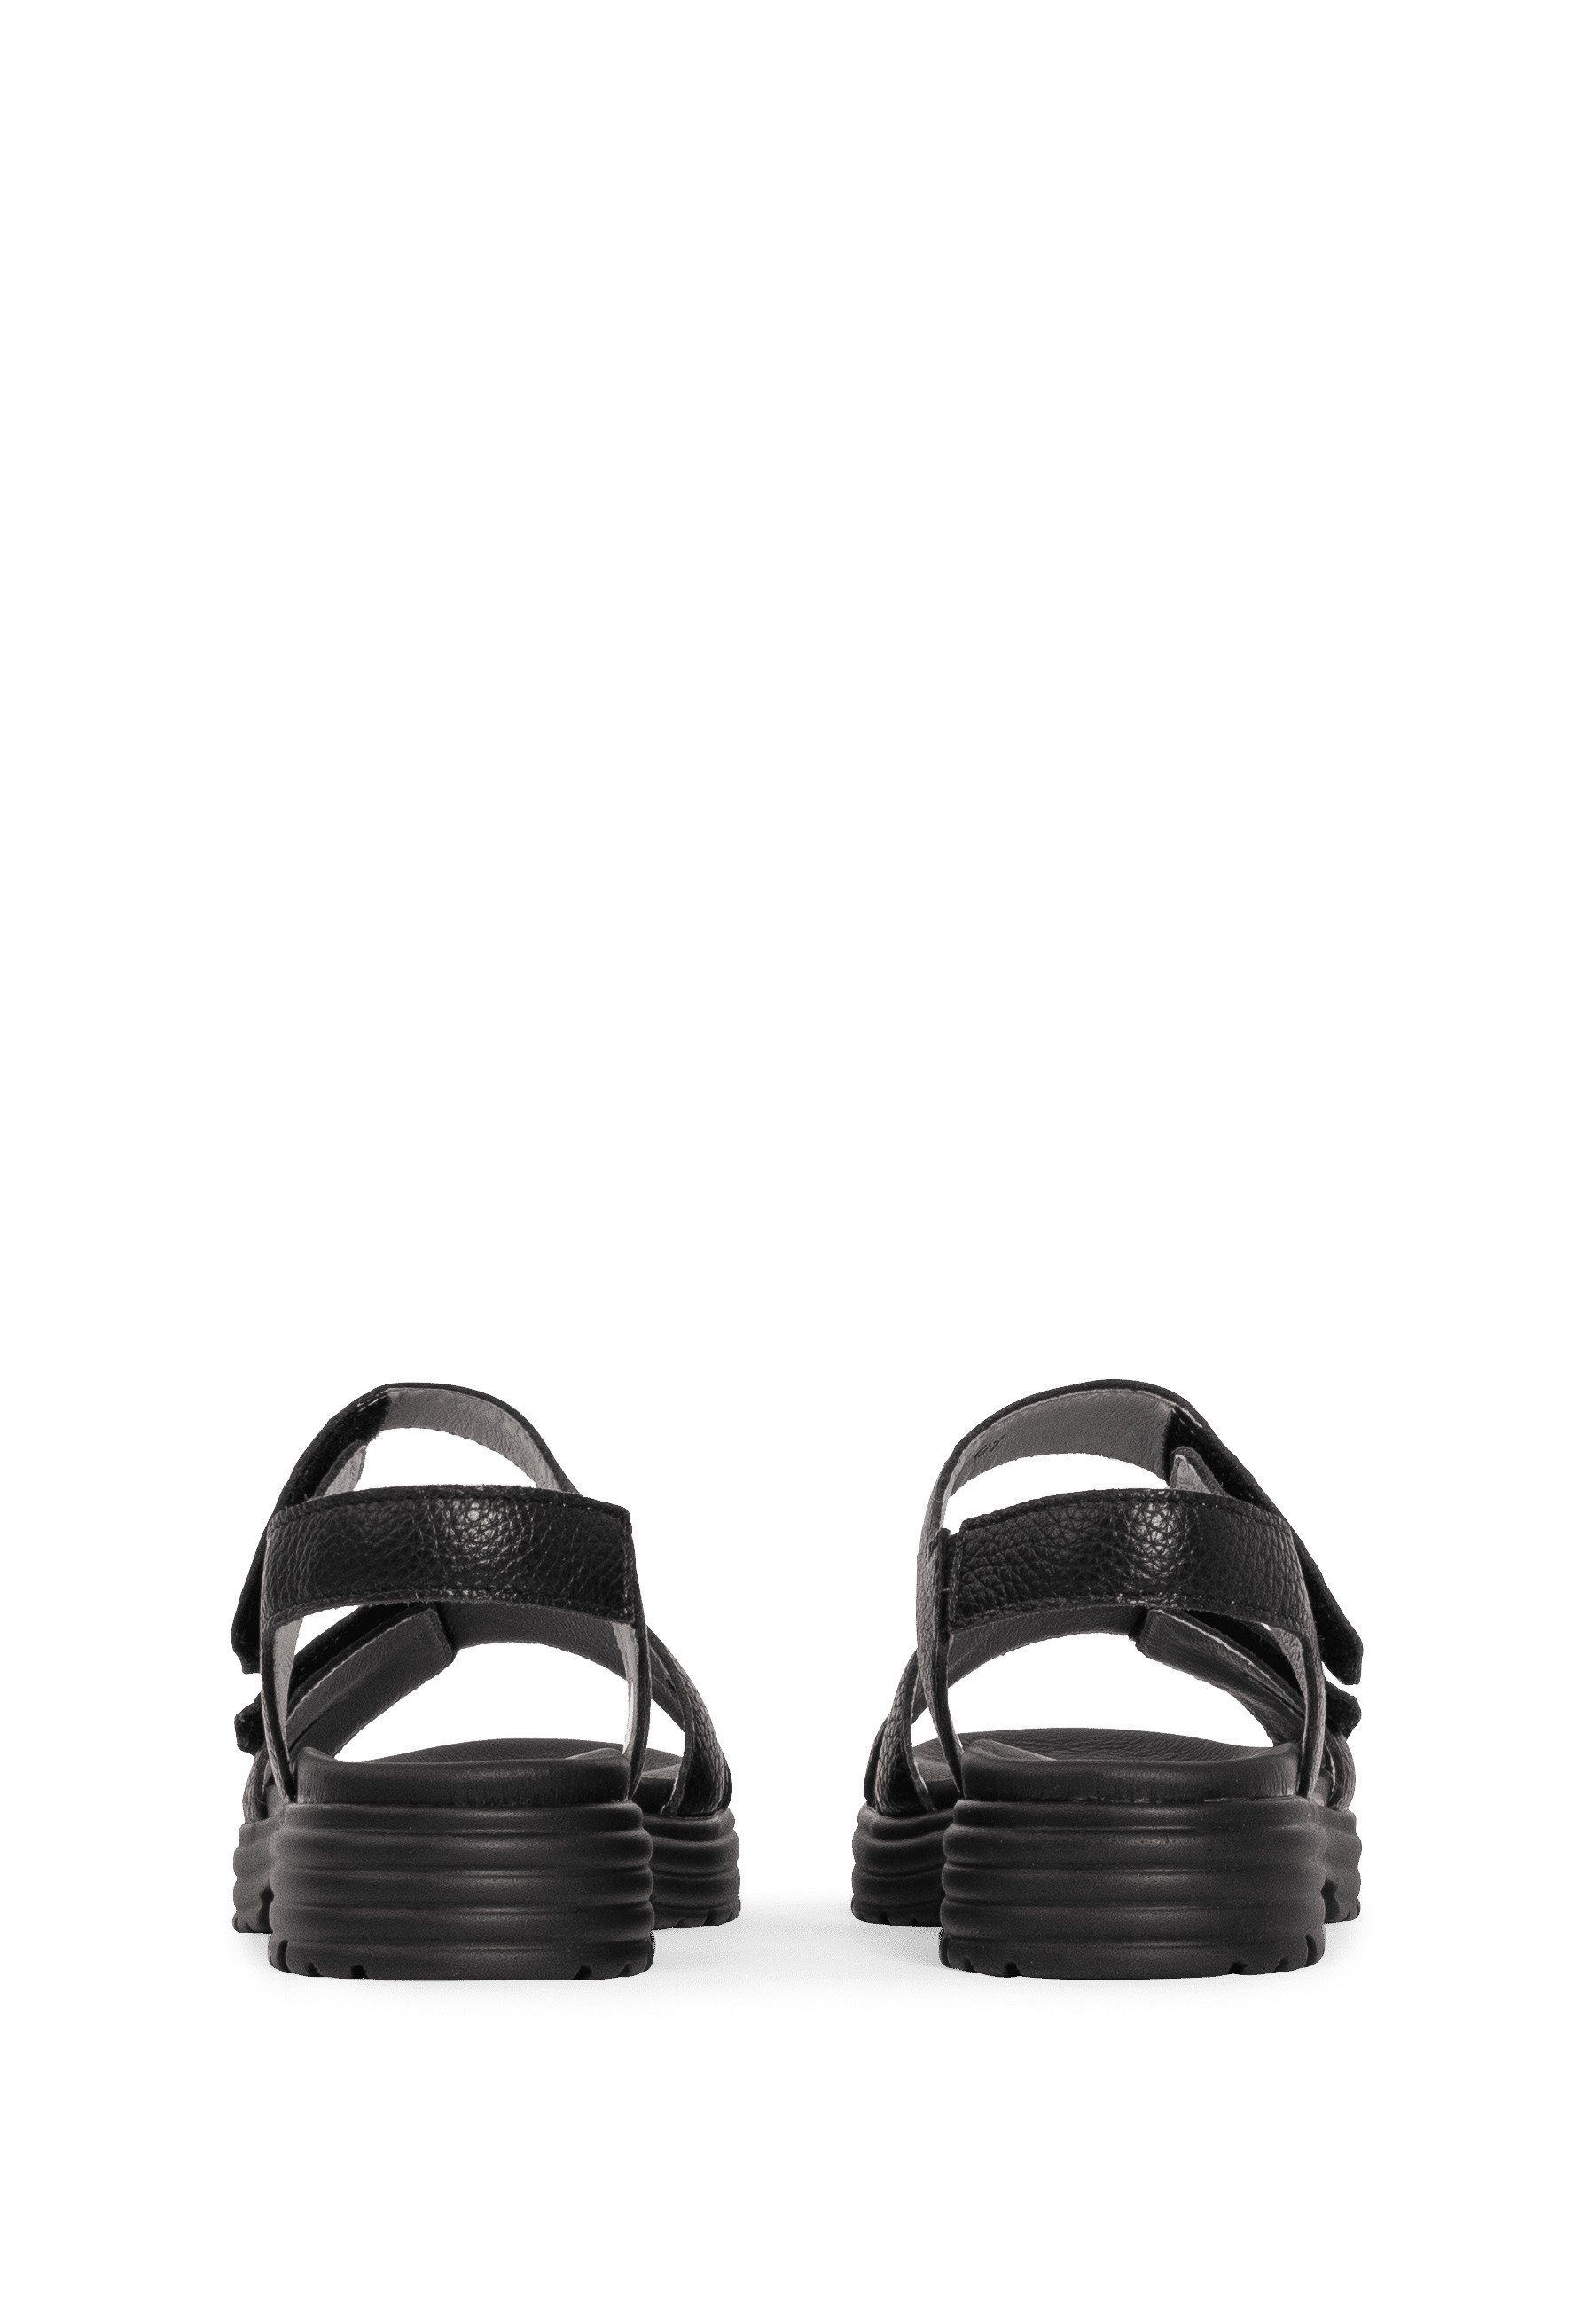 Sandale schwarz vitaform Hirschleder Sandale Damenschuhe